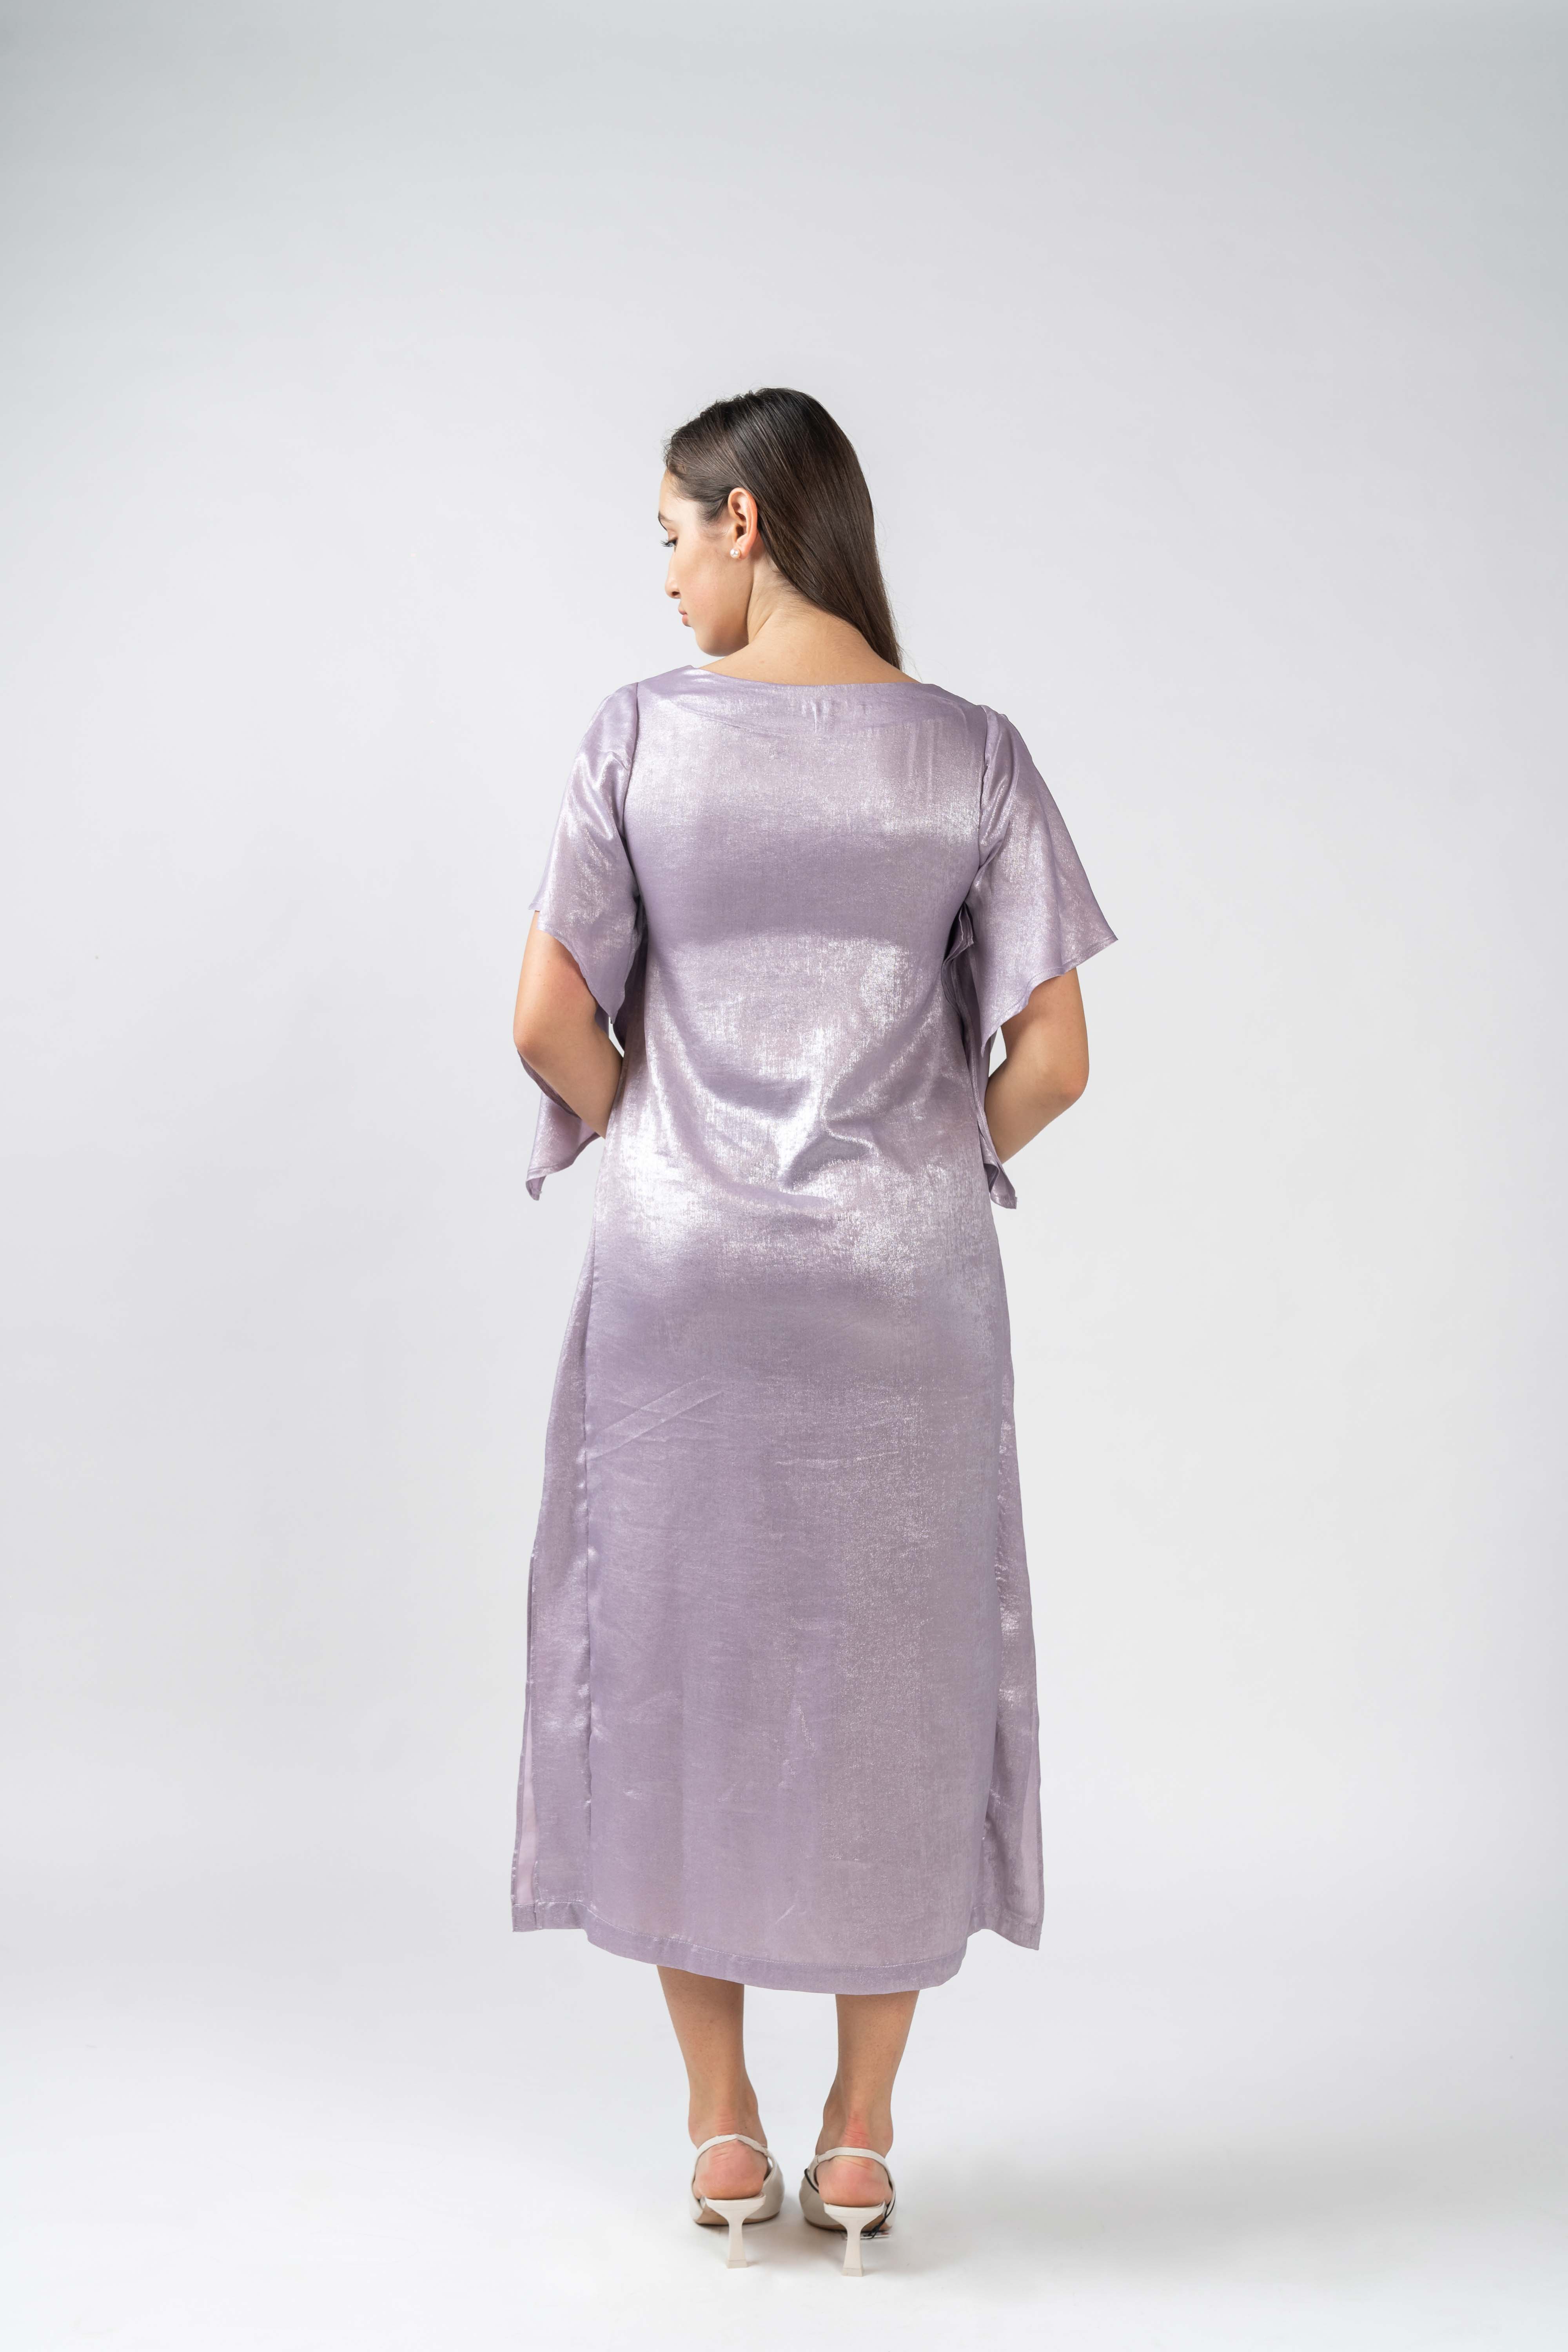 Buy Designer Evening Gowns For Women's | Dresses Online In India